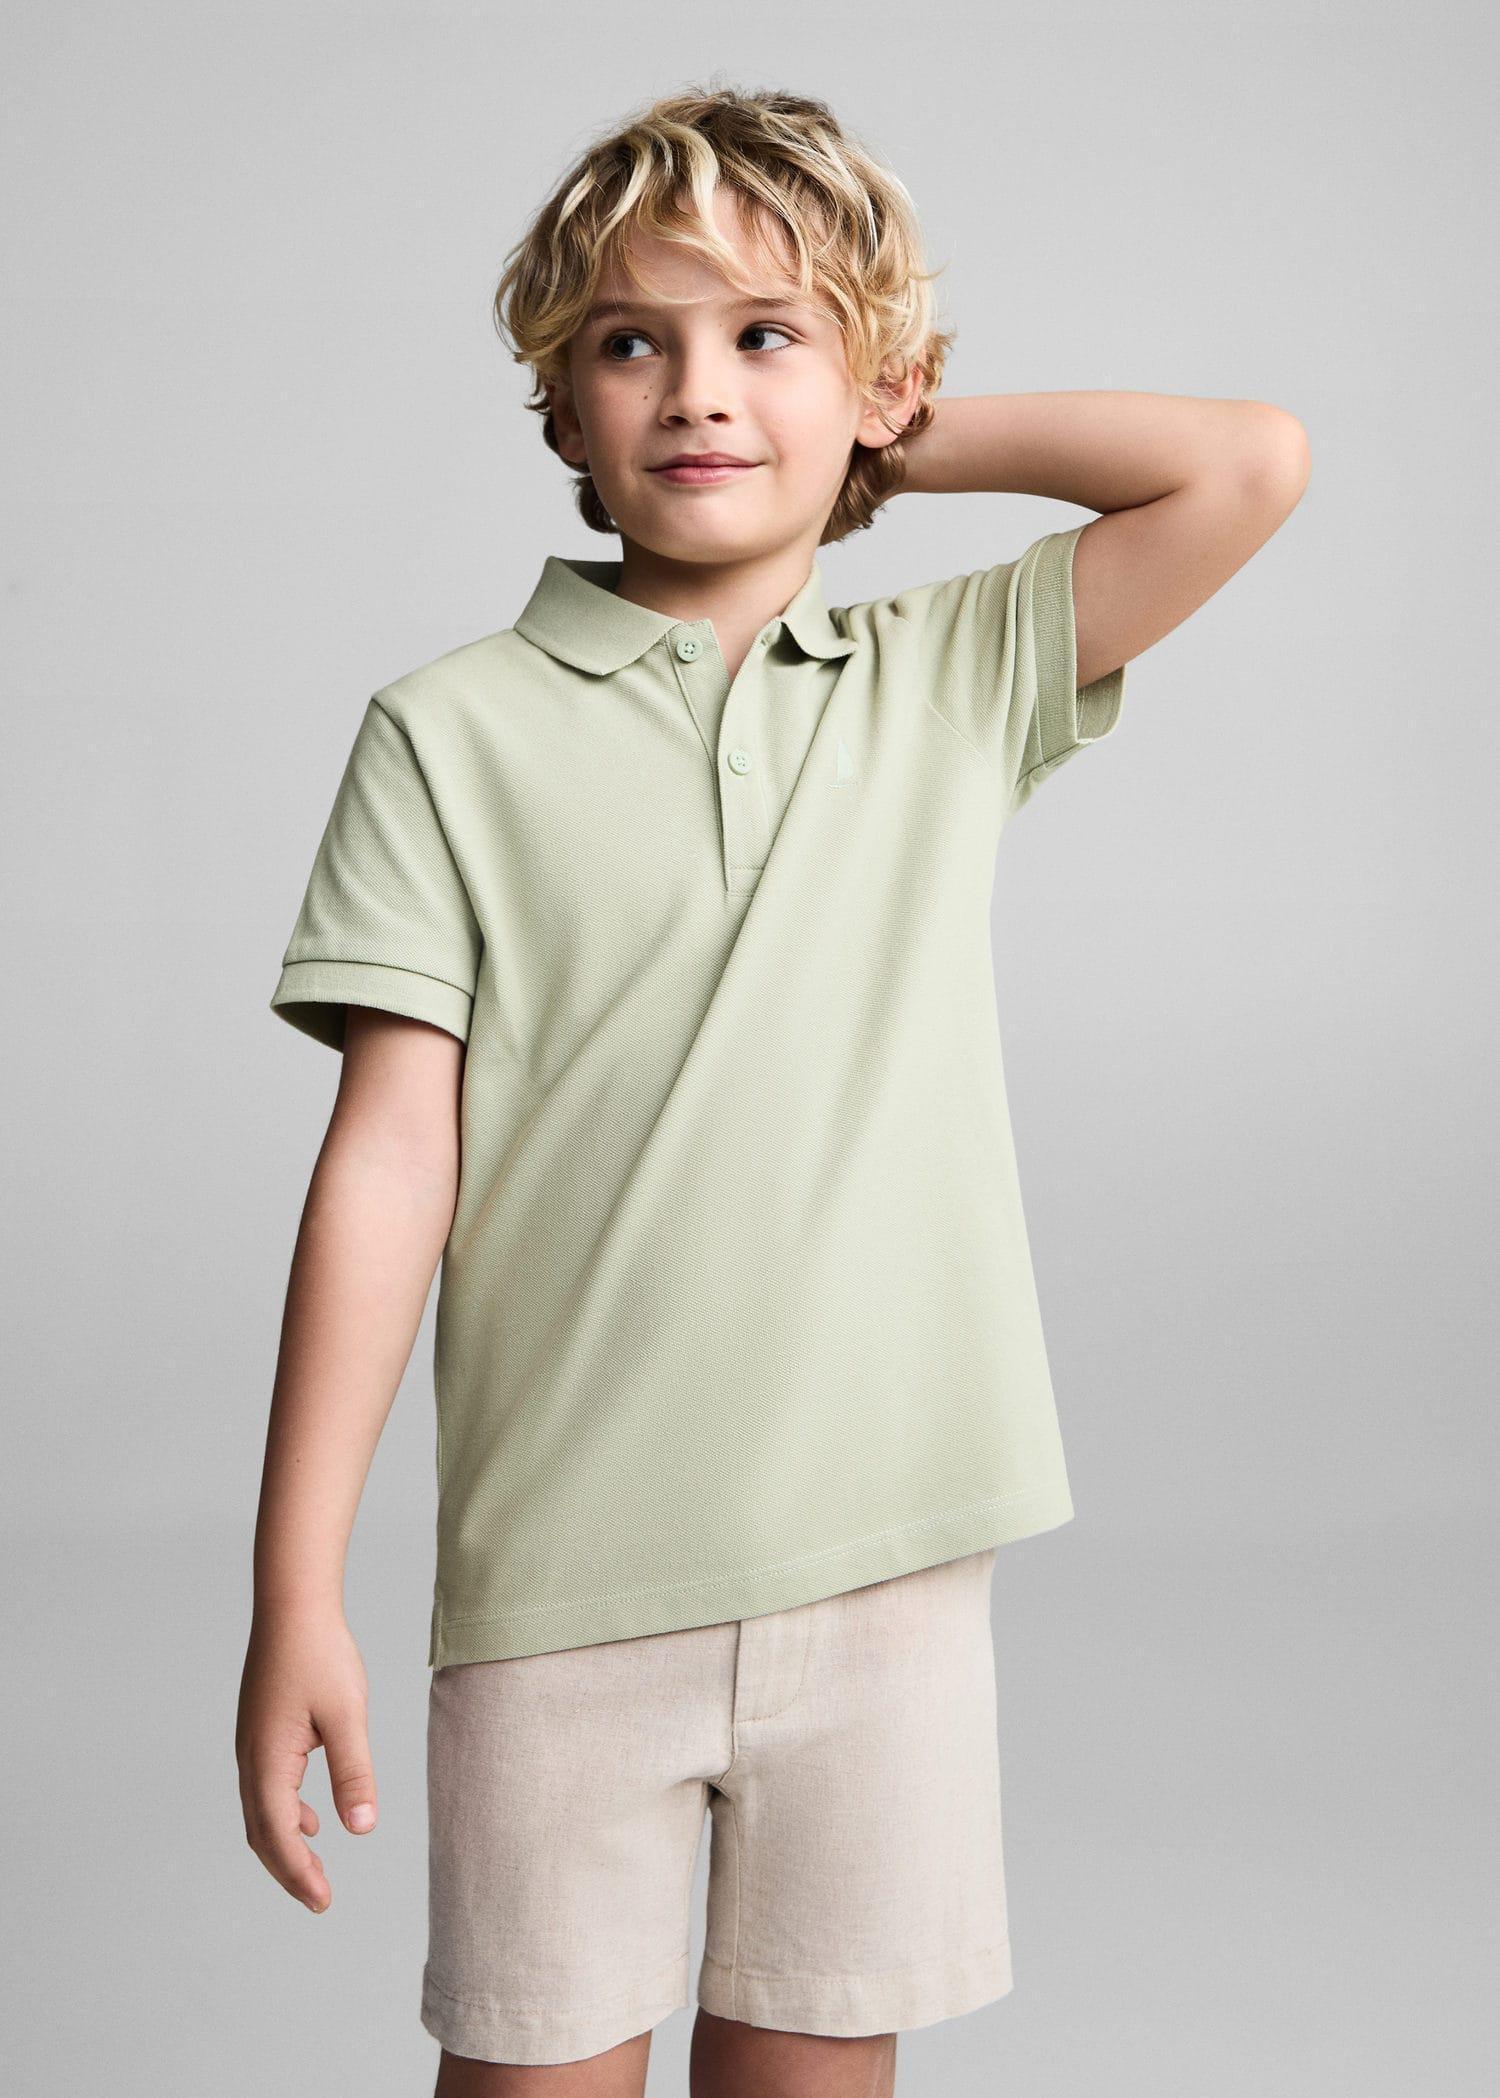 Mango - Khaki Cotton Polo Shirt, Kids Boys